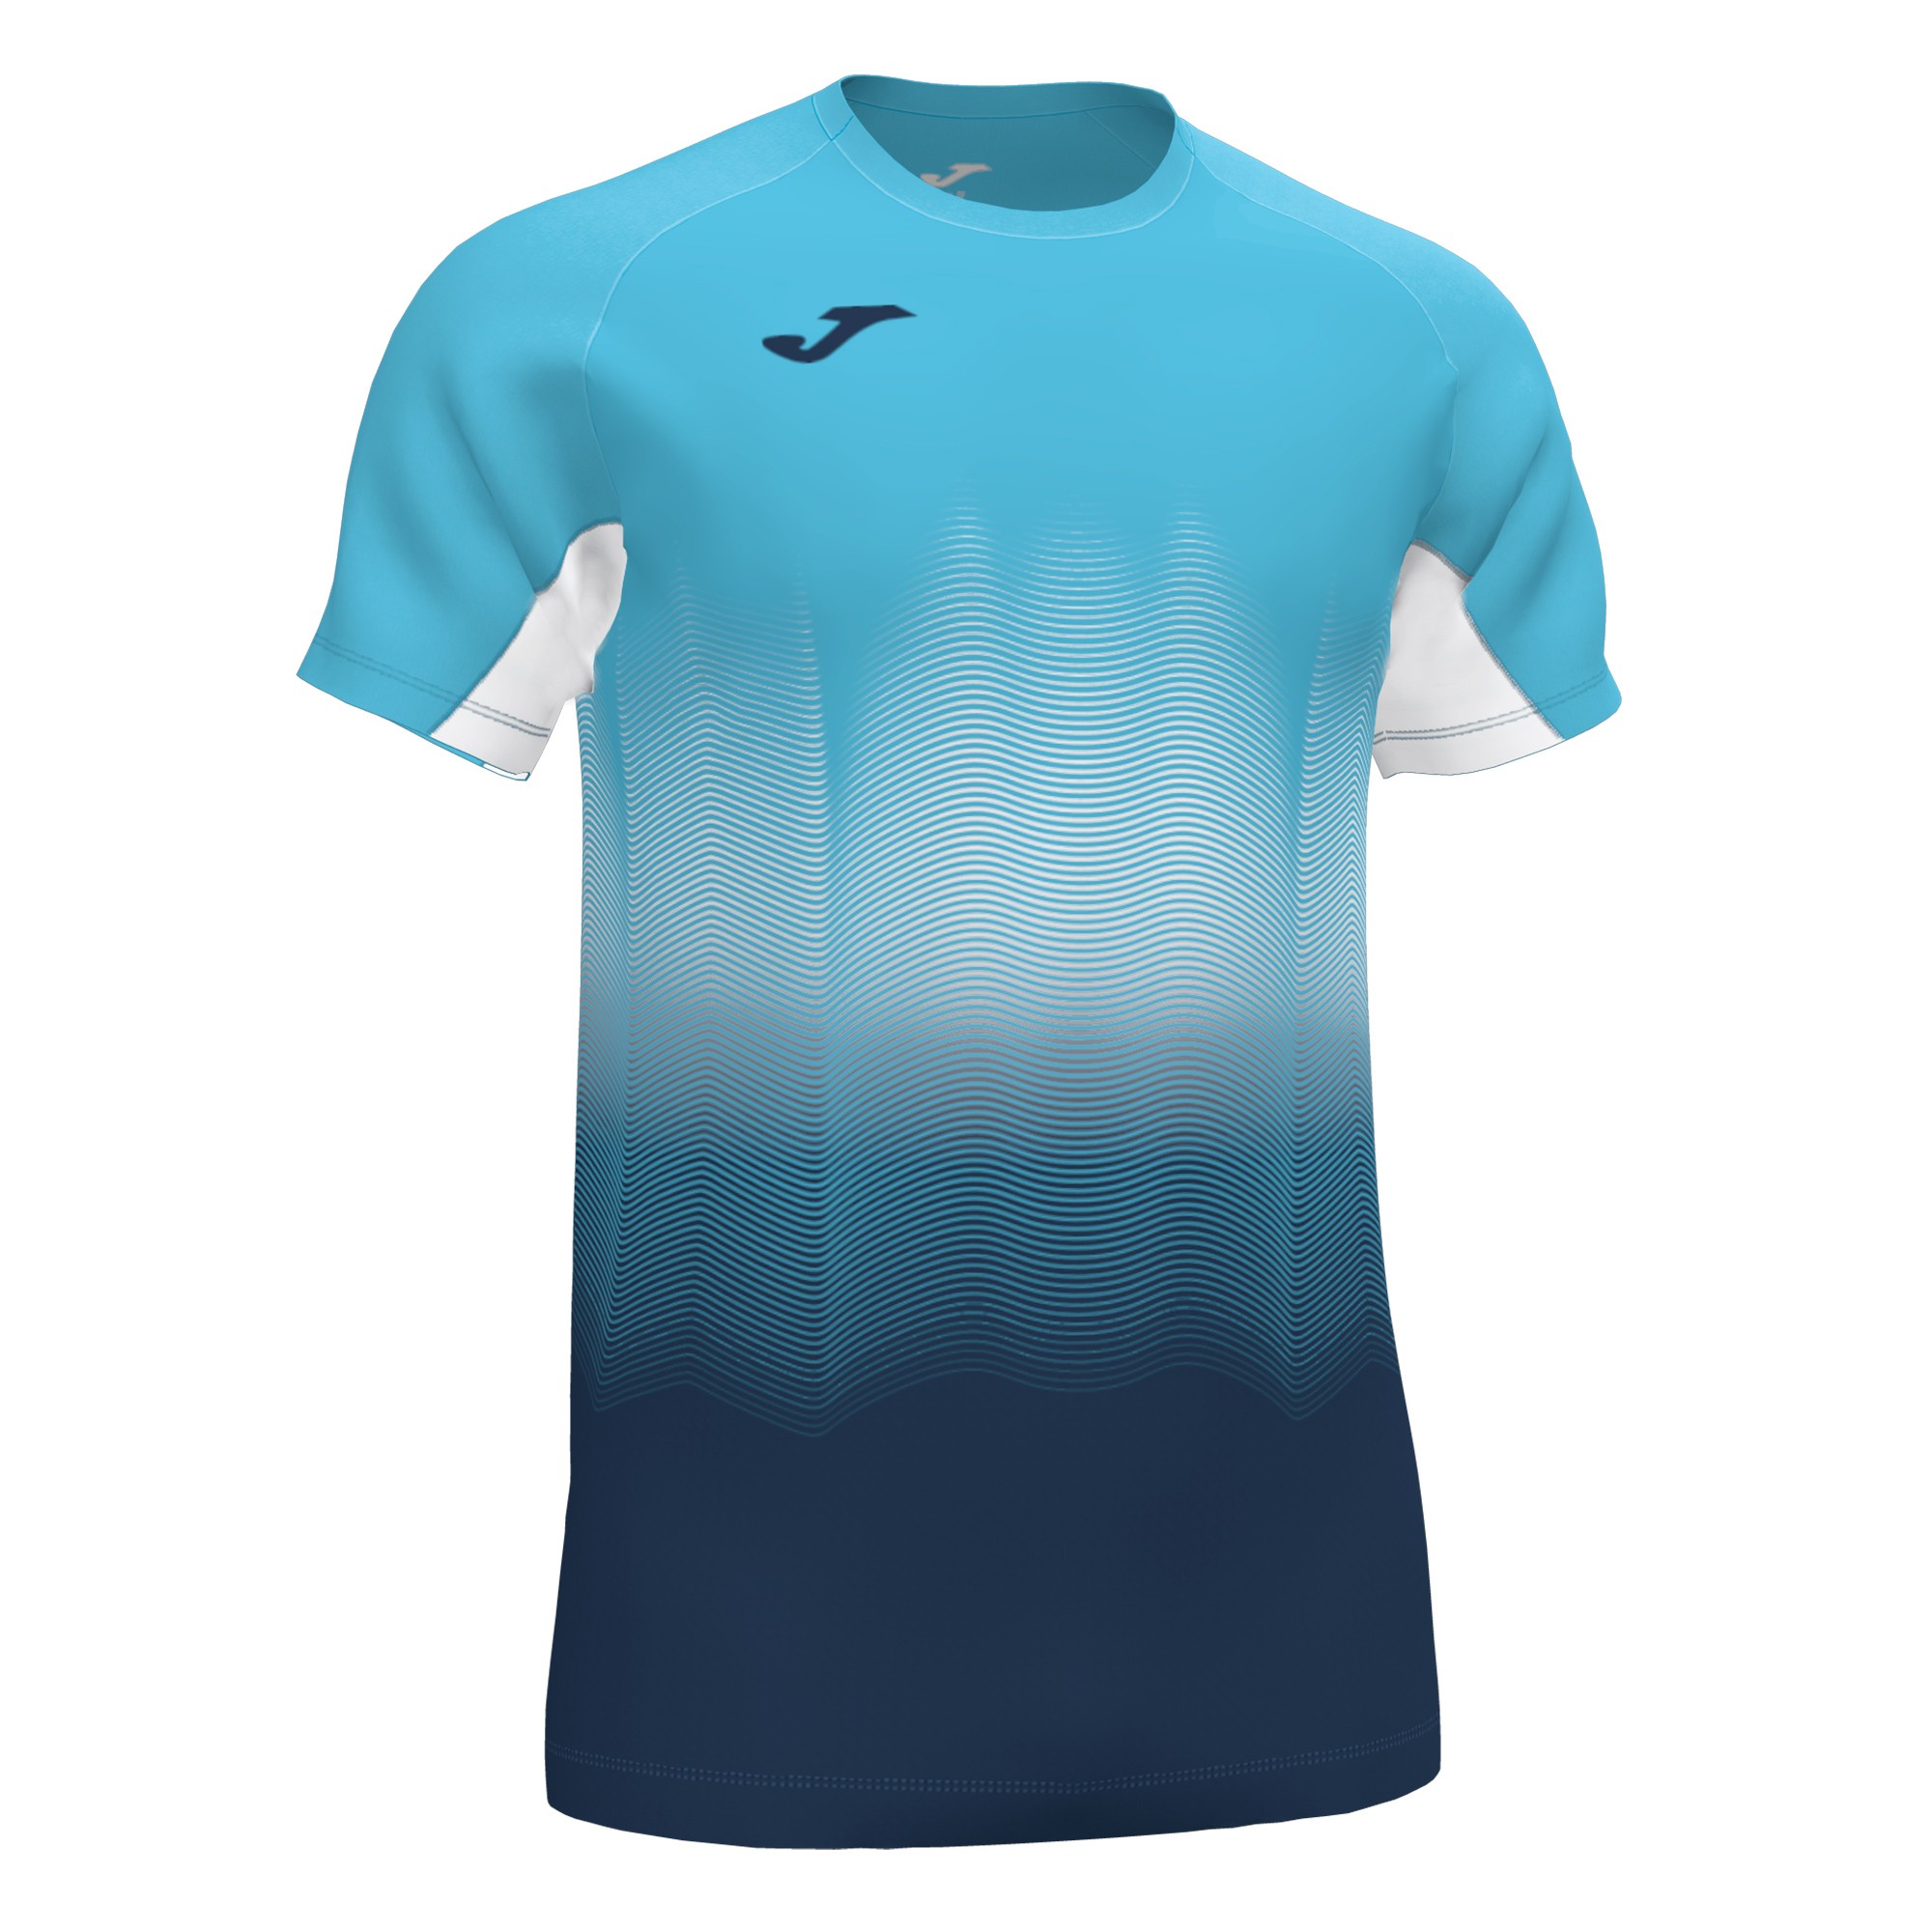 Camiseta JOMA RUNNING ELITE VII 101519.013 - Deportes Manzanedo